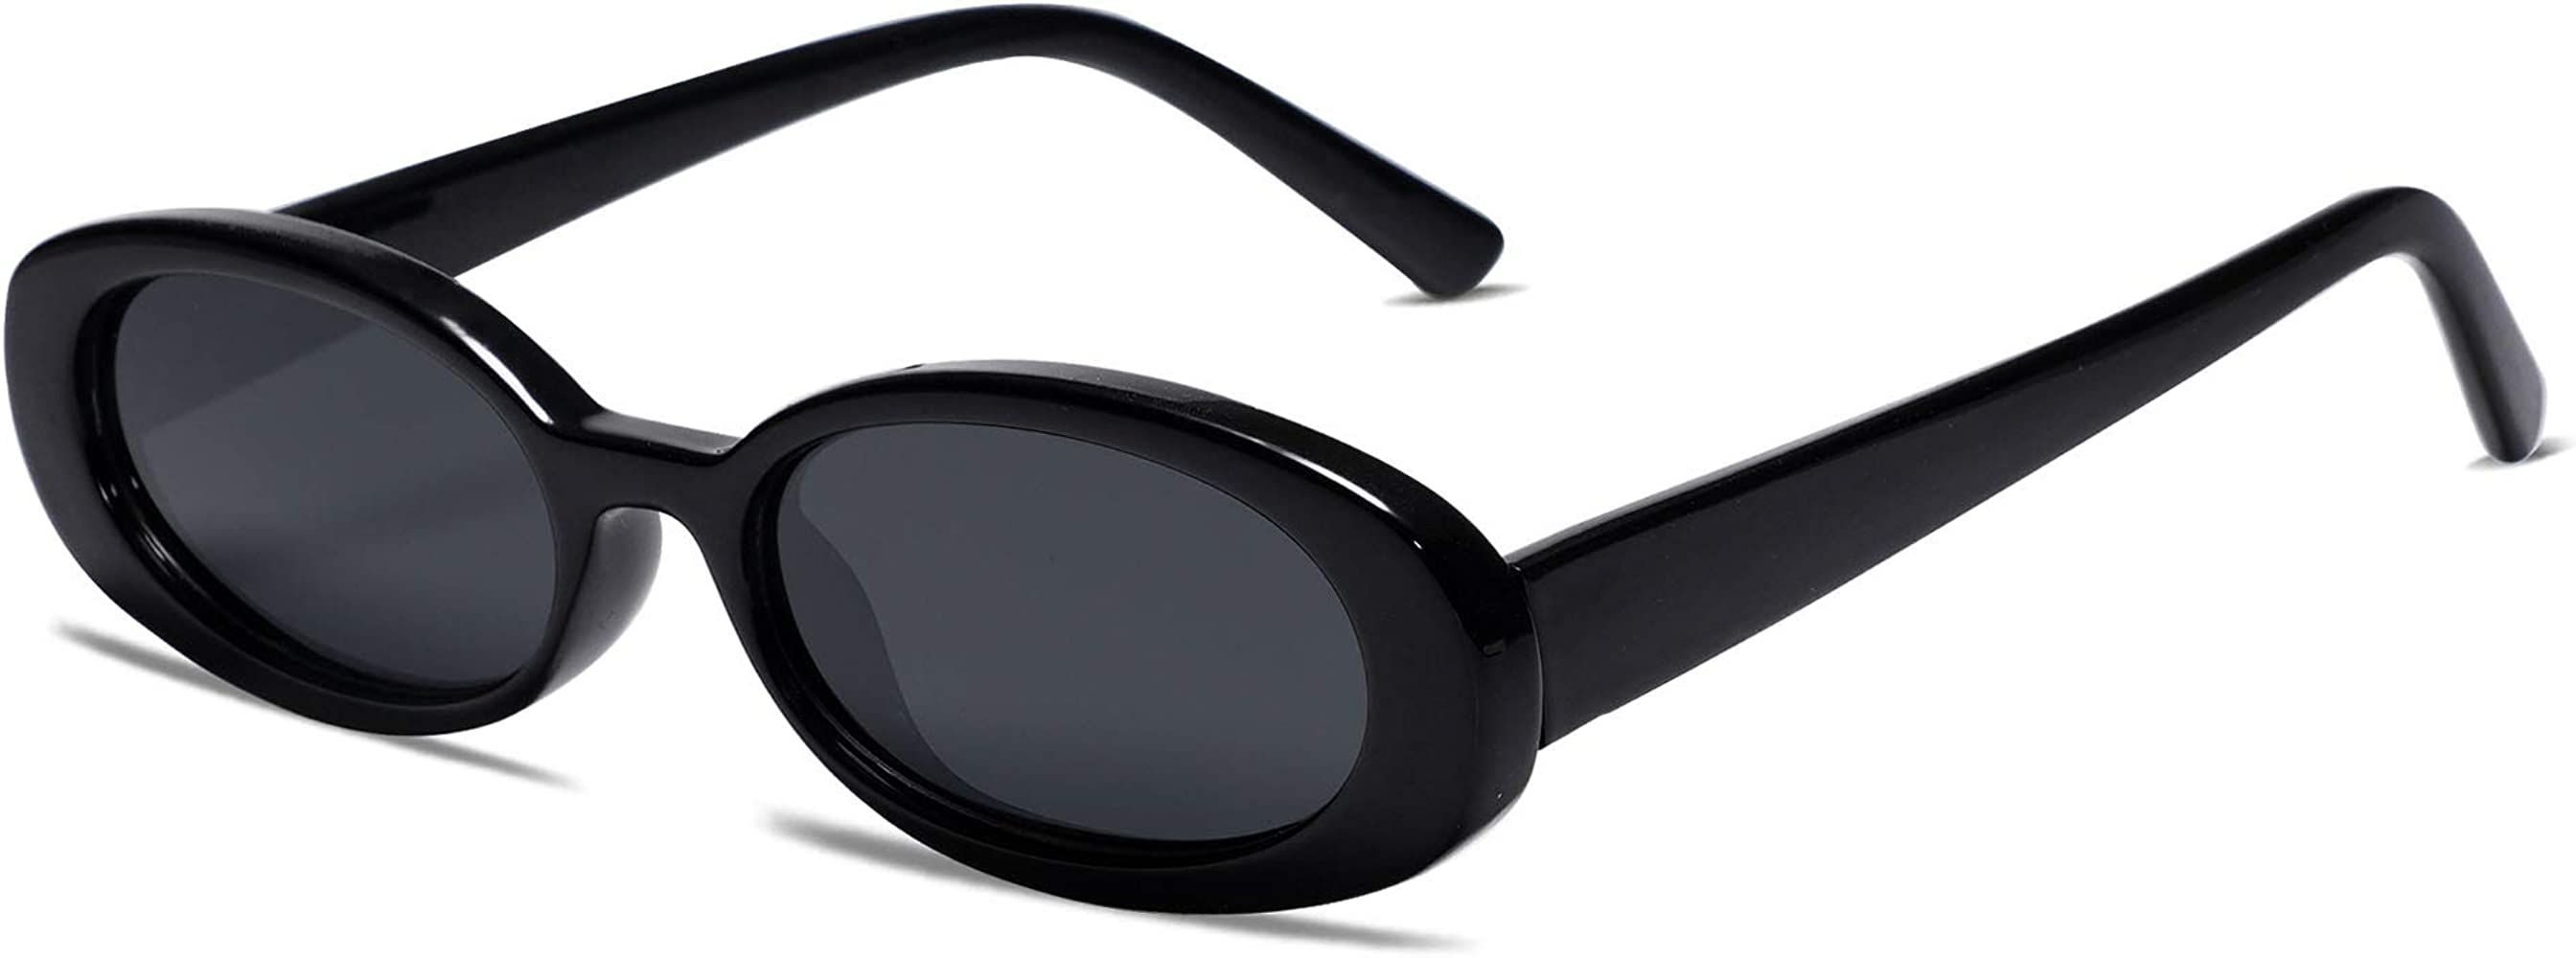 Vanlinker Tiny Small 90s Sunglasses Women Polarized Retro Oval Sunglasses Tinted Glasses VL9580 | Amazon (US)